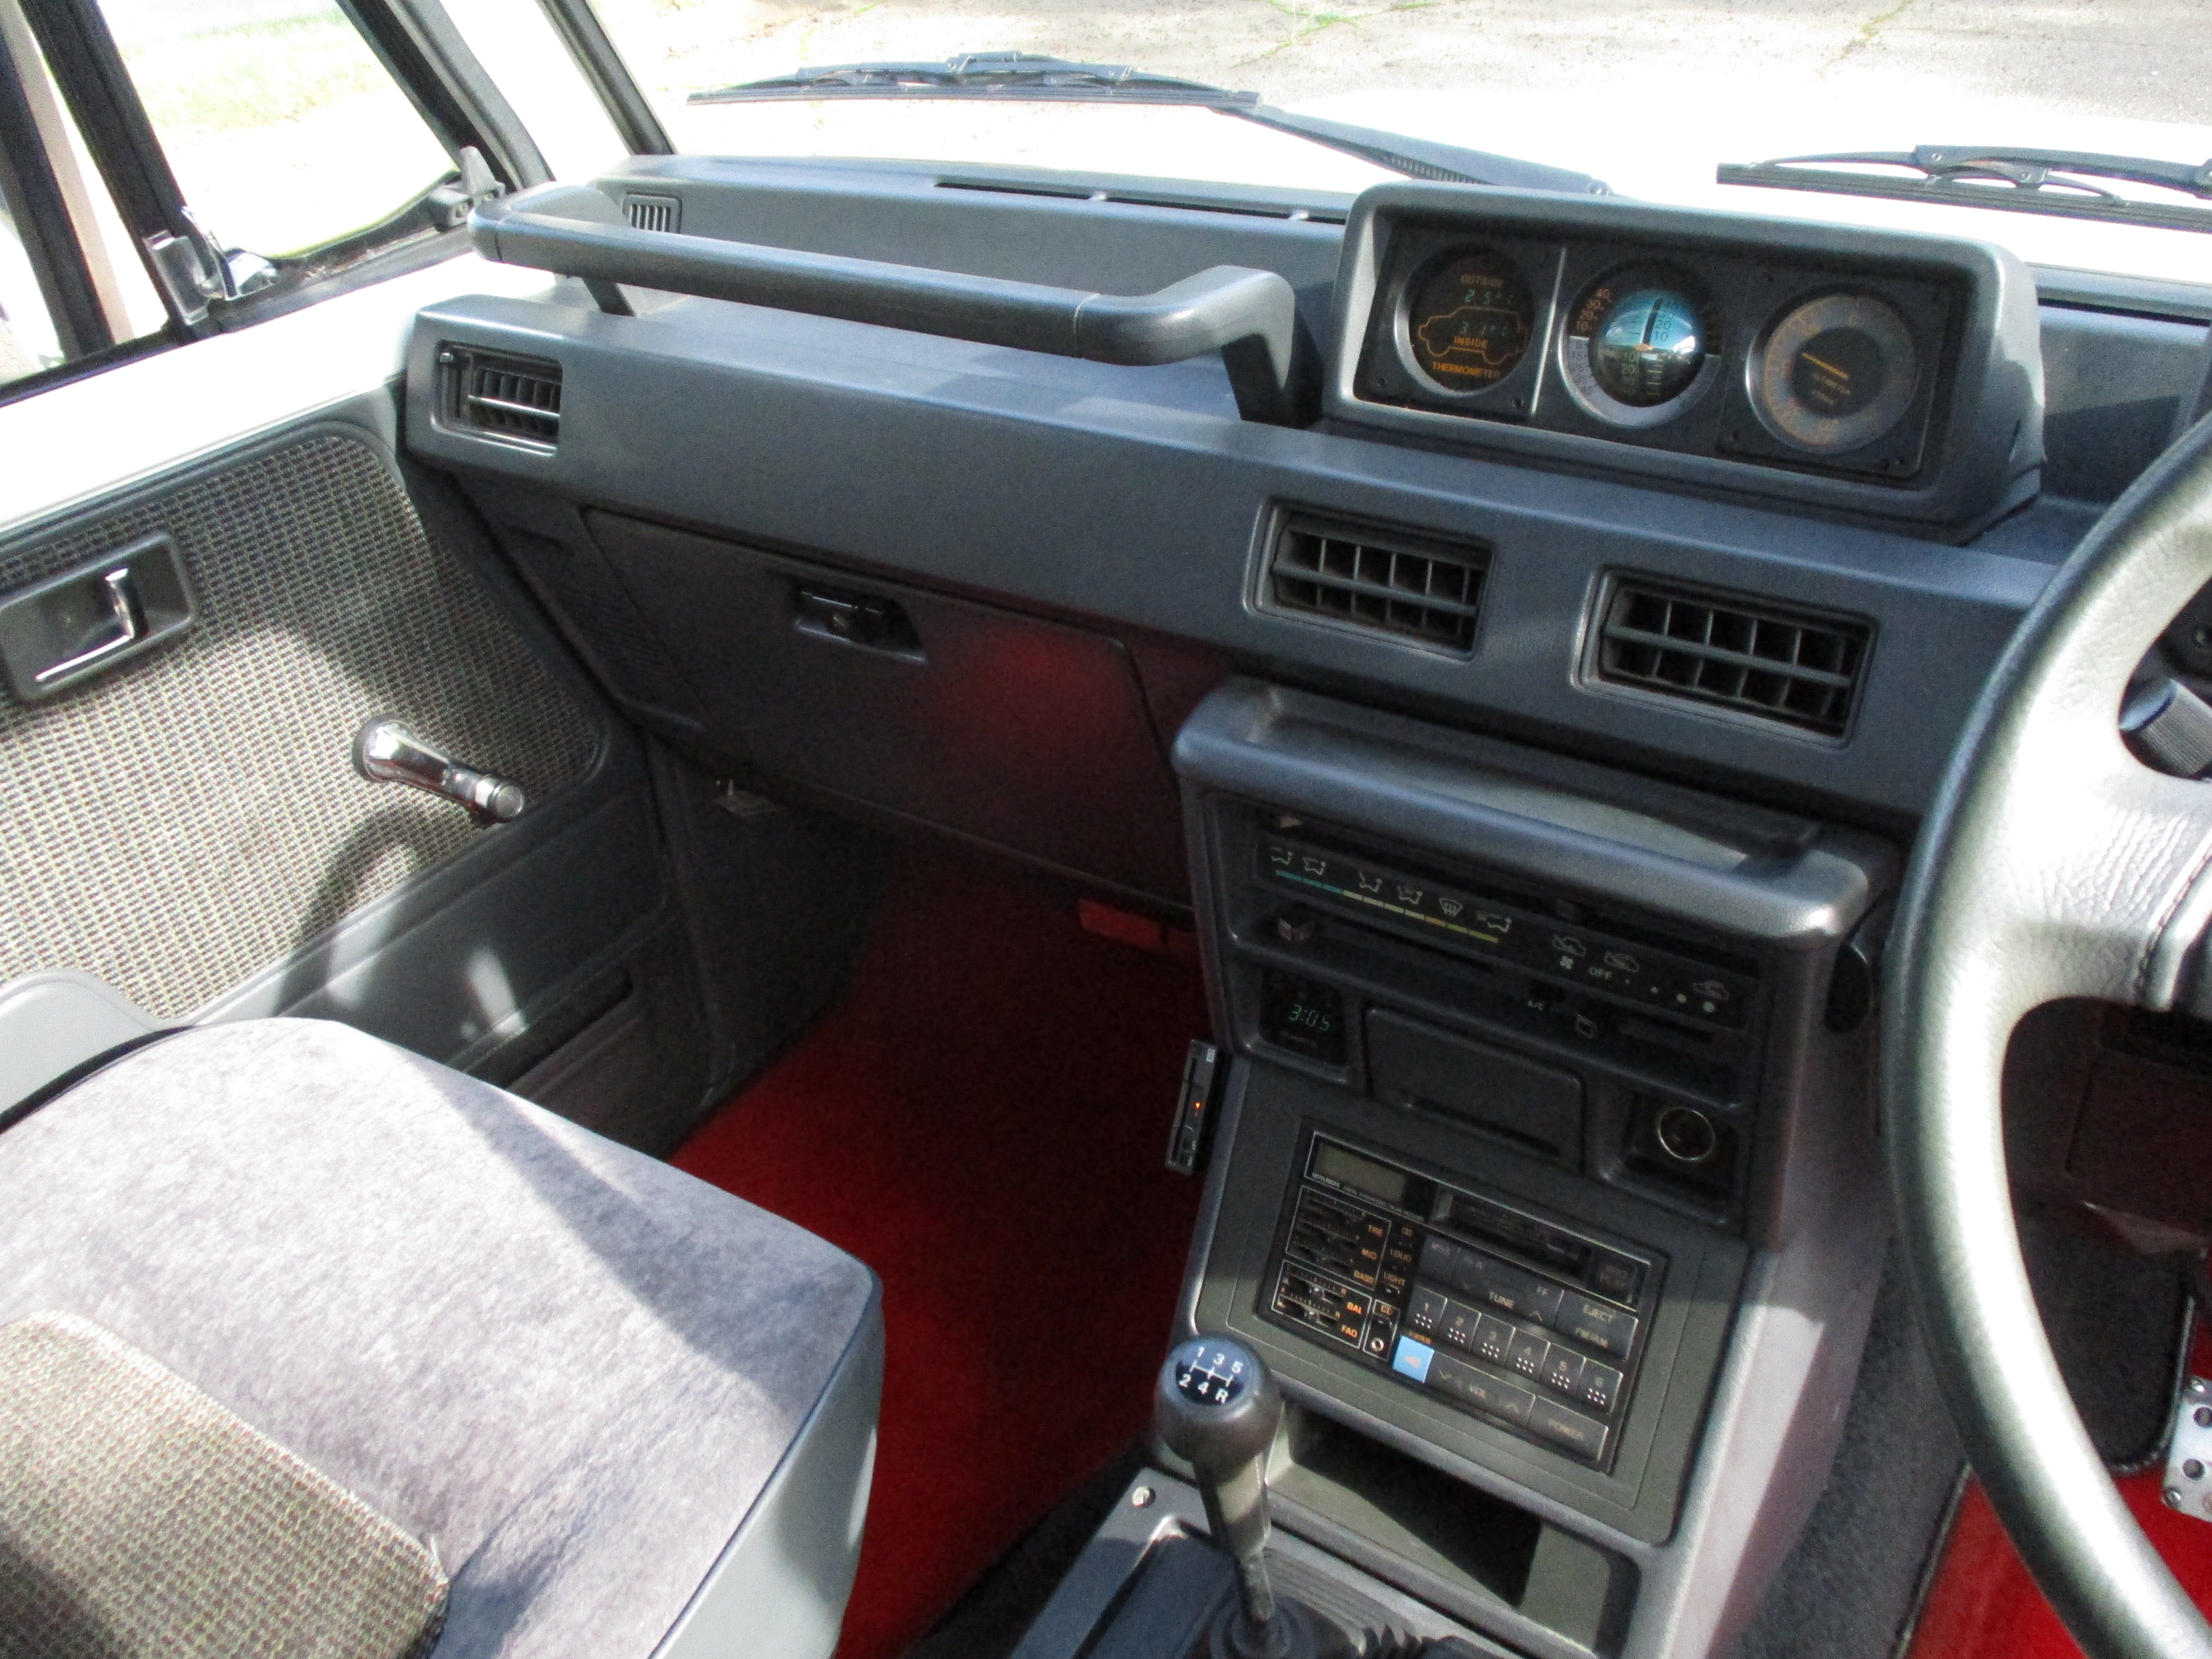 JDM 89 Mitsubishi Pajero 4x4 Turbo Diesel Manual SUV